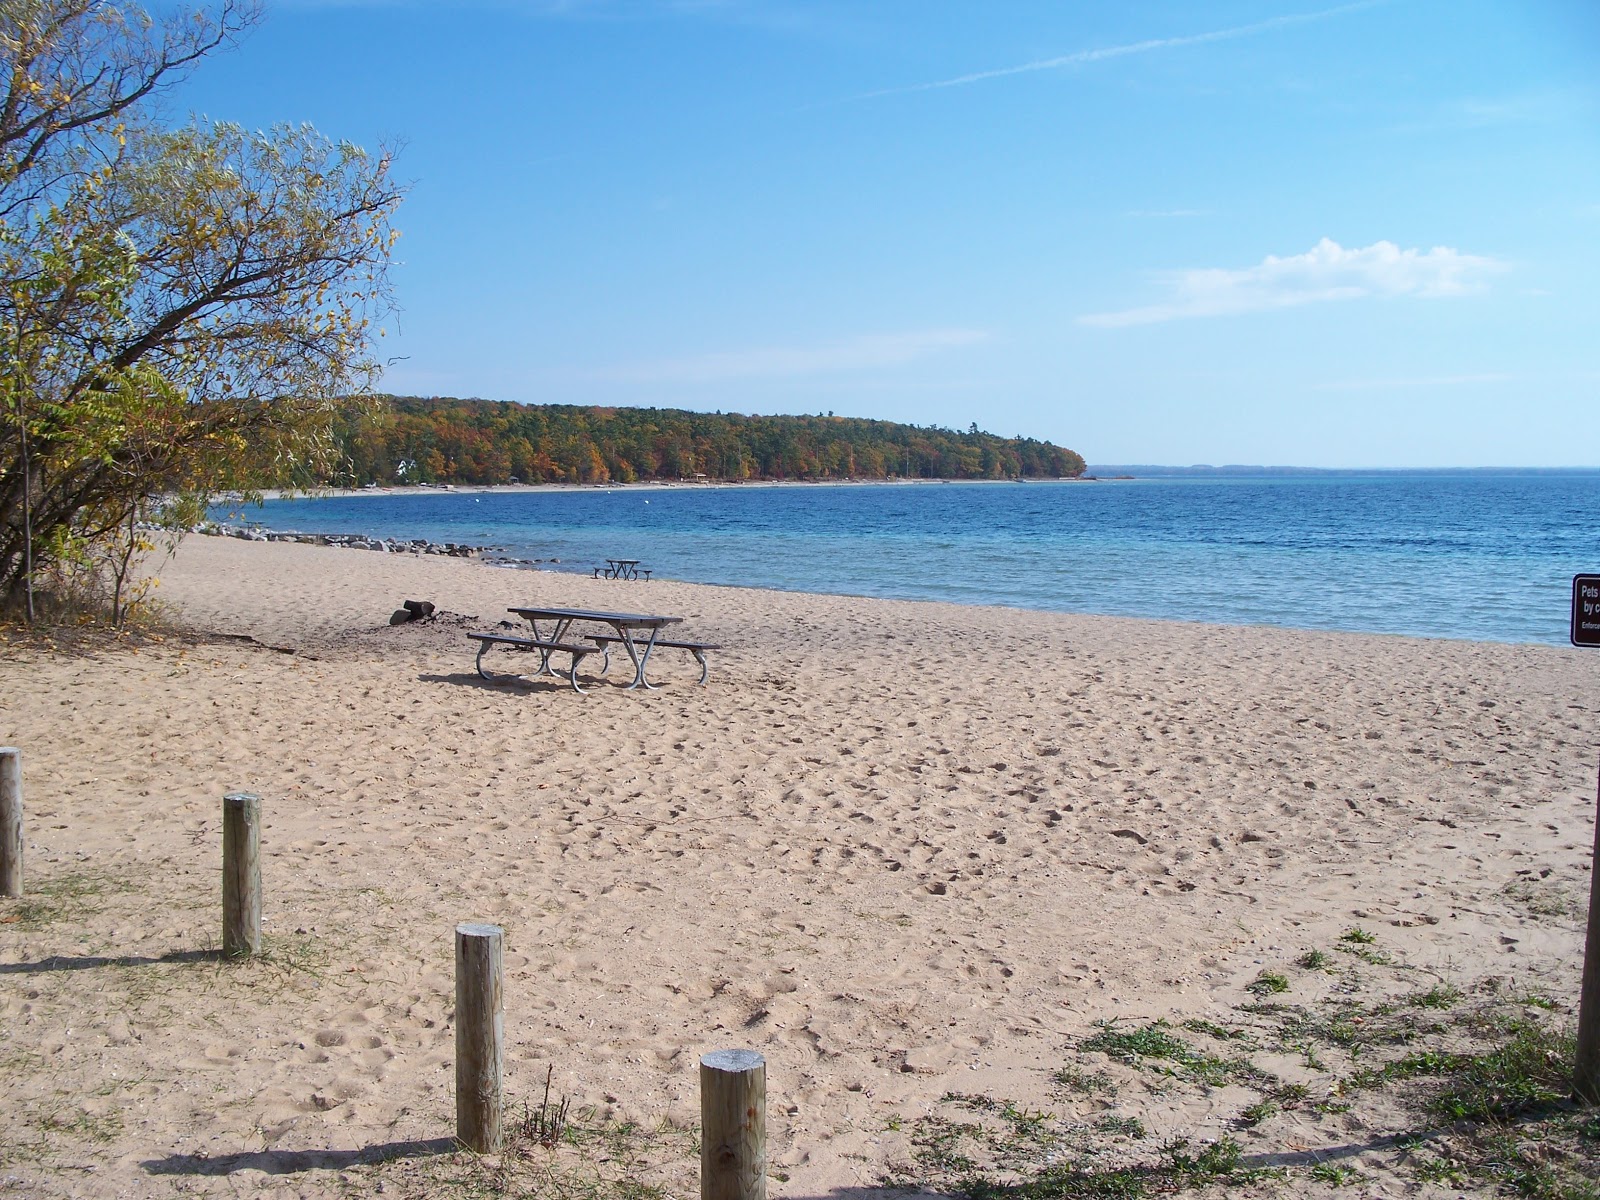 Foto di Haserot Beach ubicato in zona naturale